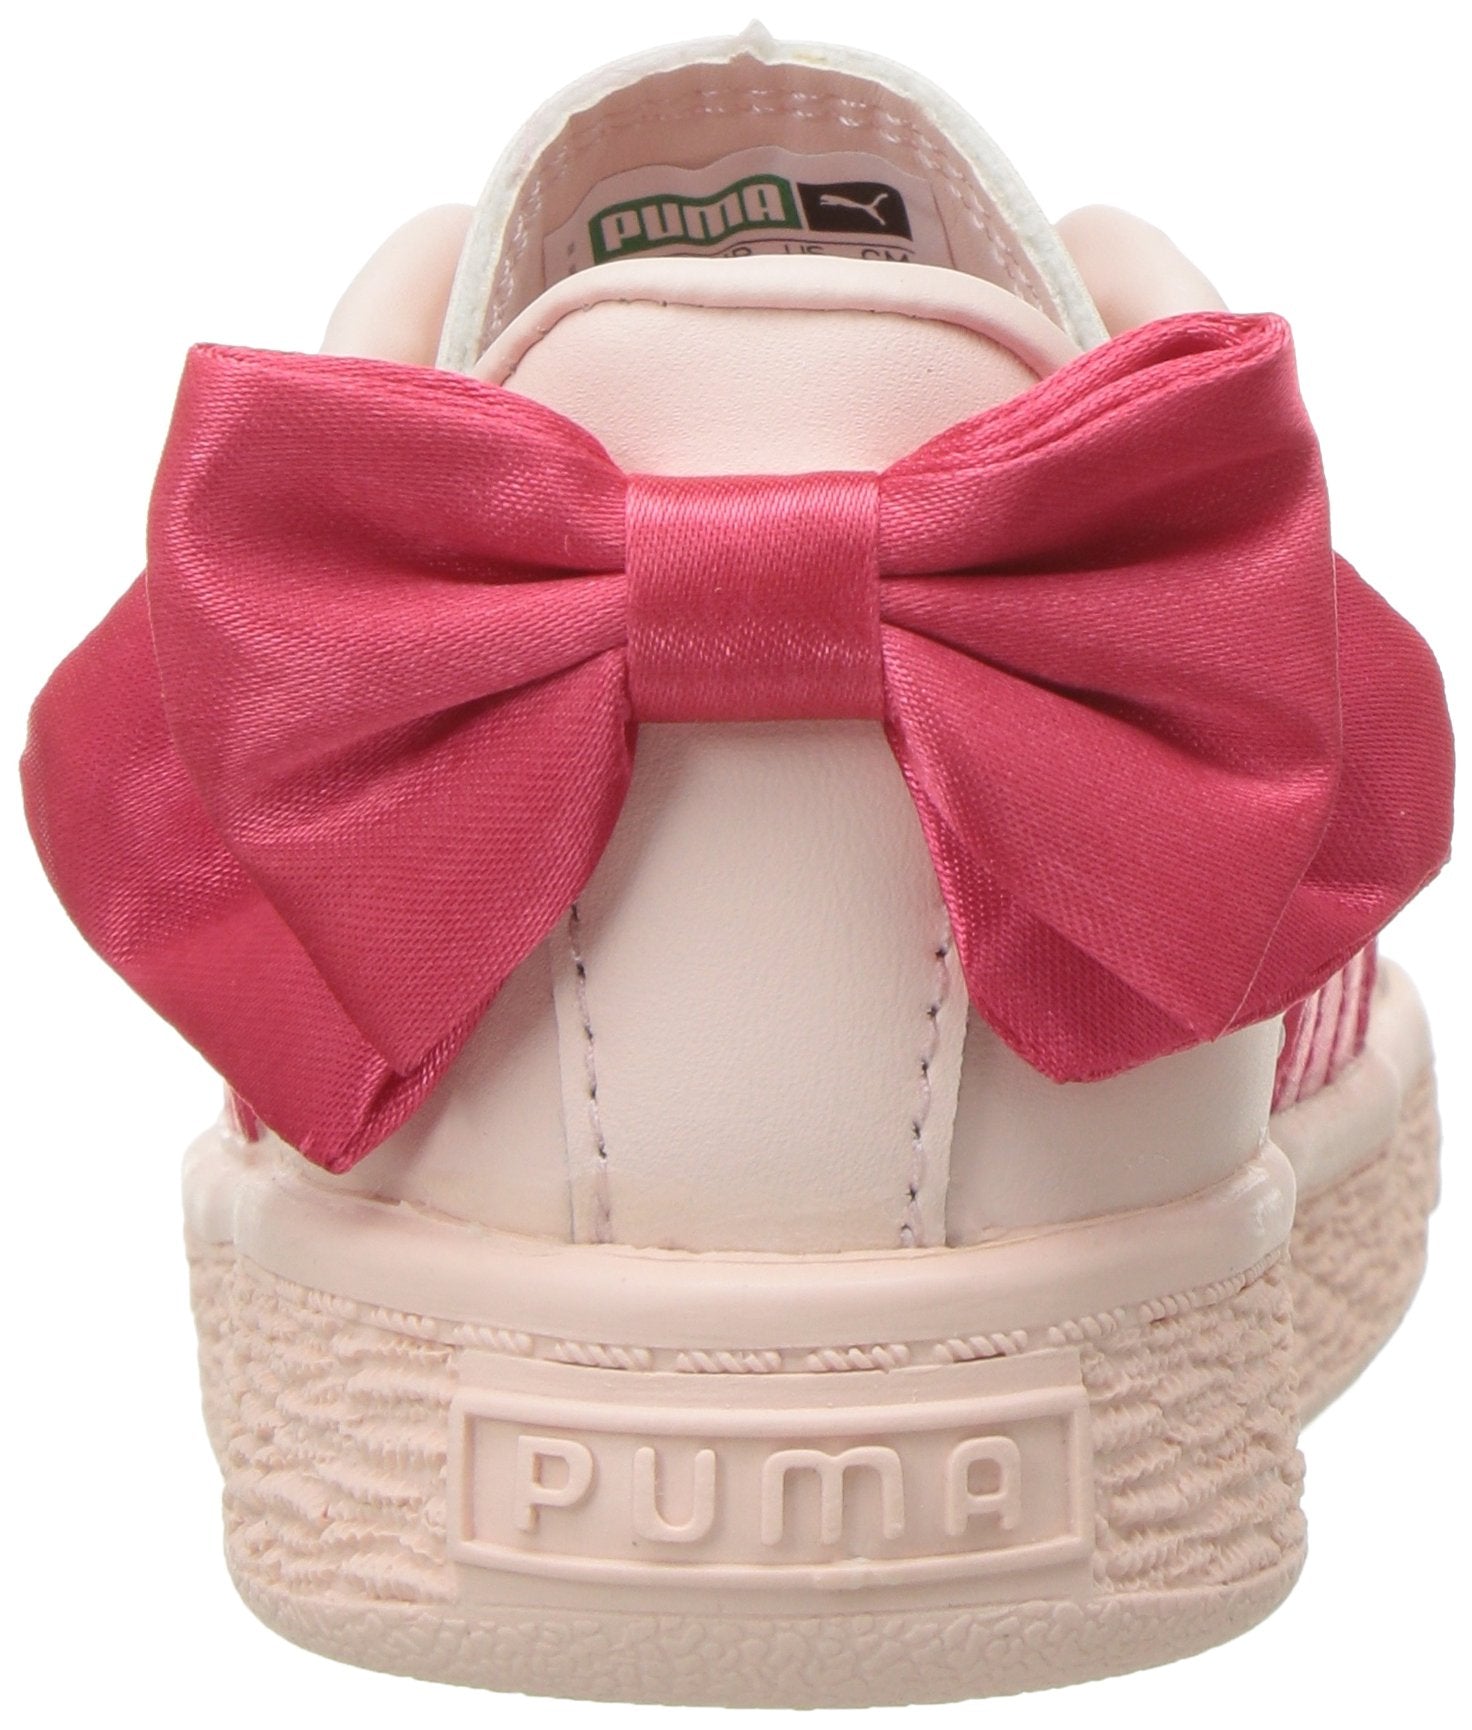 Puma Pink Basket Bow AC inf kids - Puma